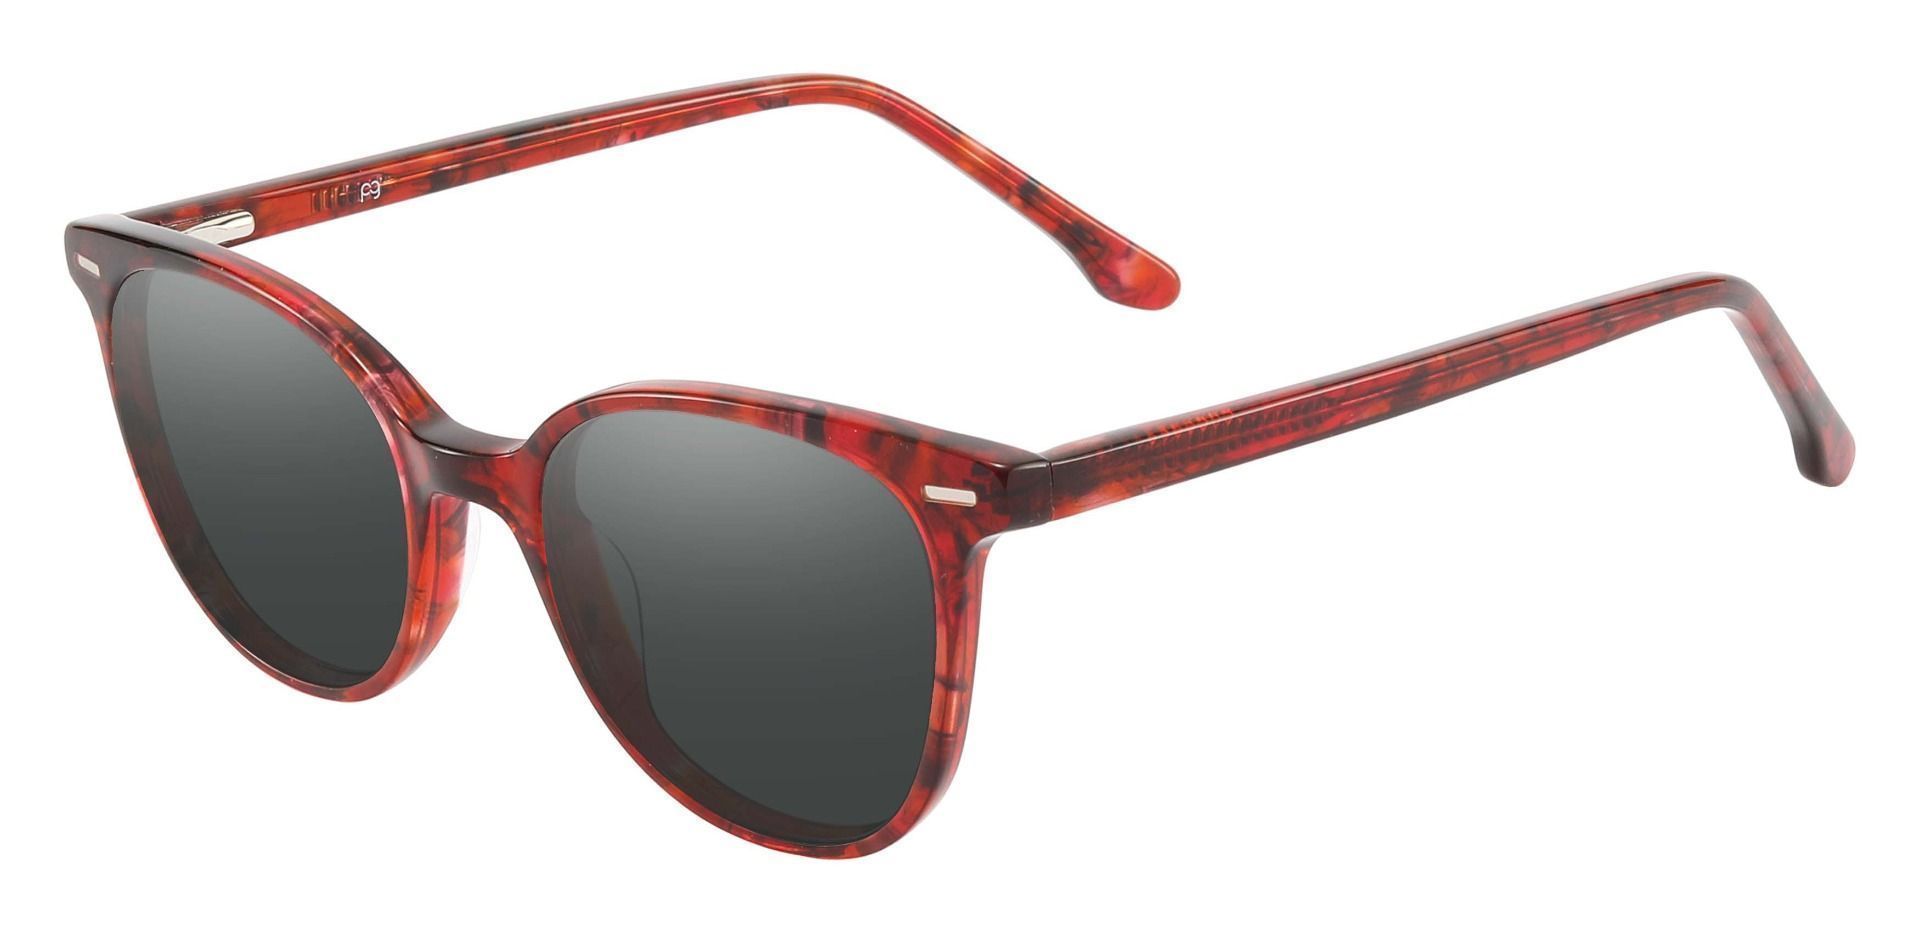 Chili Oval Prescription Sunglasses - Red Frame With Gray Lenses